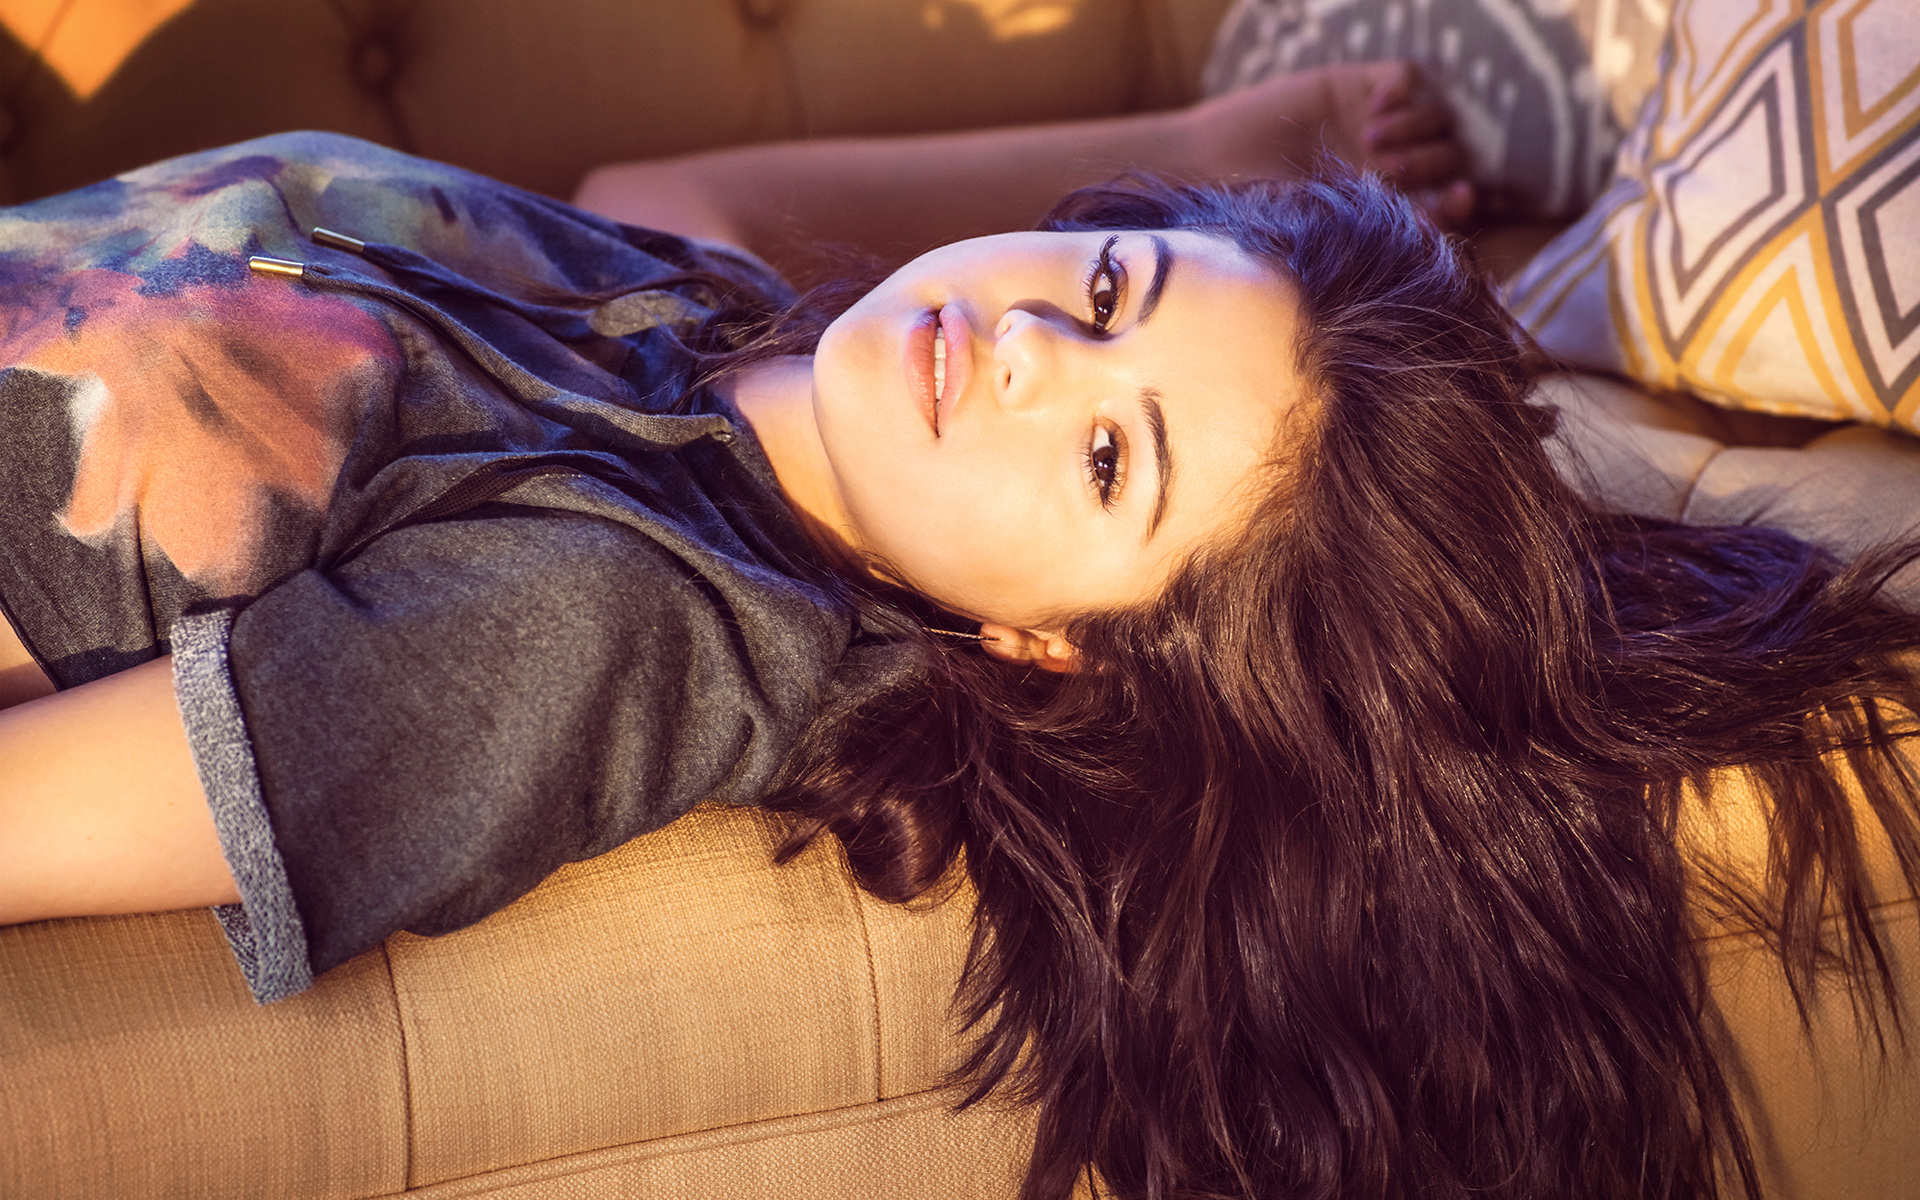  Selena Gomez Cellphone FHD pic